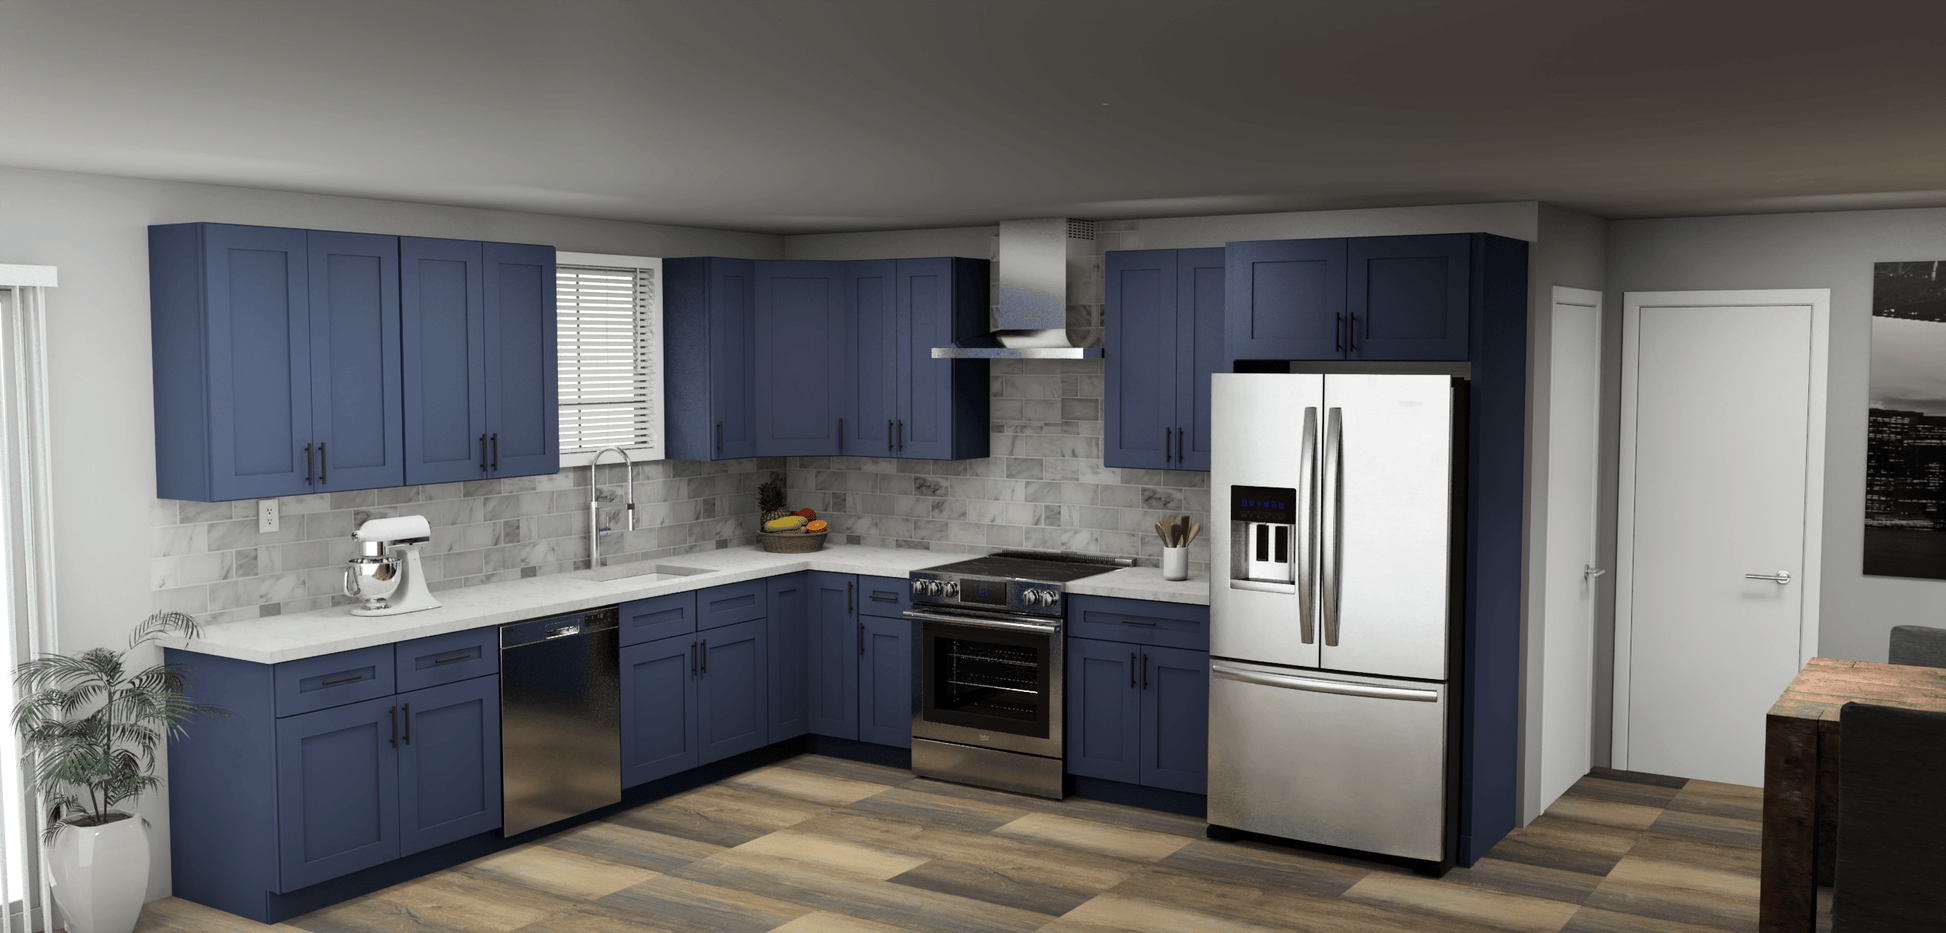 LessCare Danbury Blue 11 x 12 L Shaped Kitchen Main Layout Photo